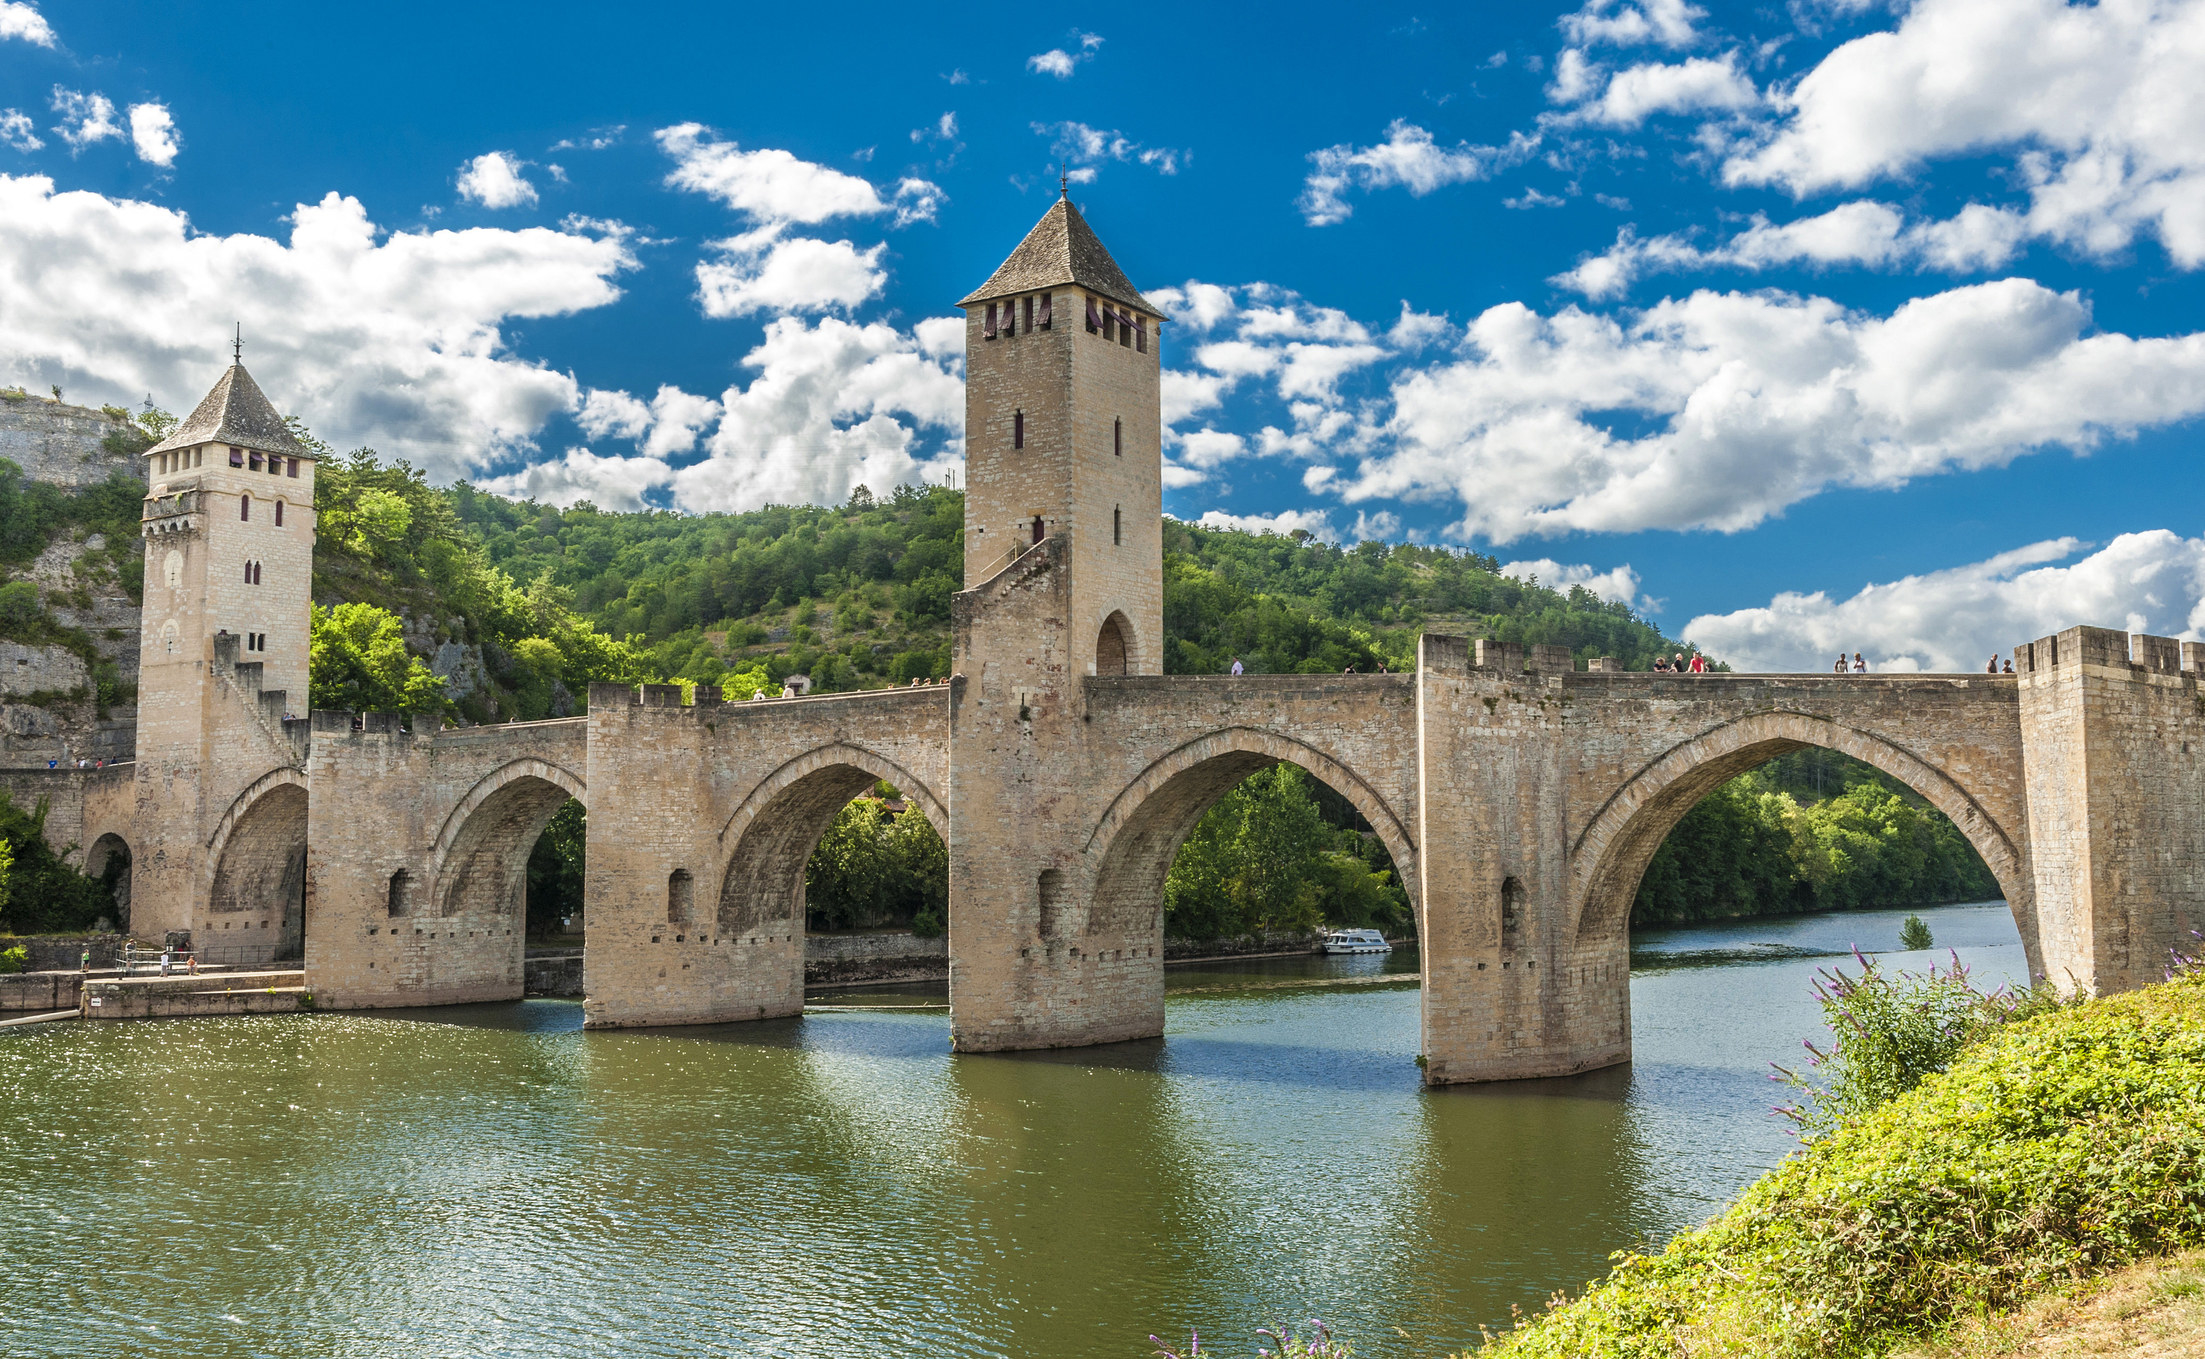 The Valentre Bridge in Cahors, France.